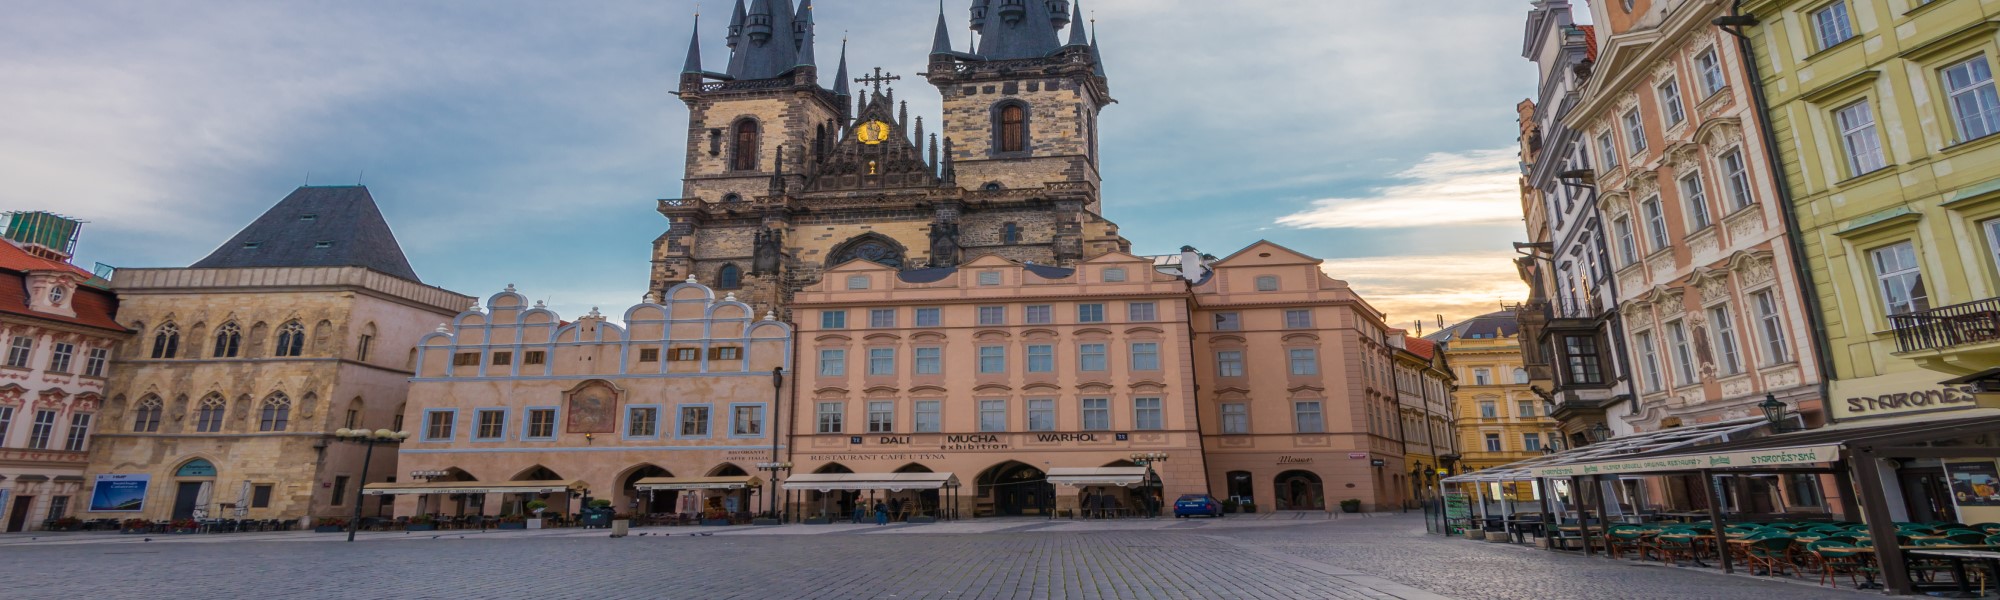 Ciudad vieja de Praga